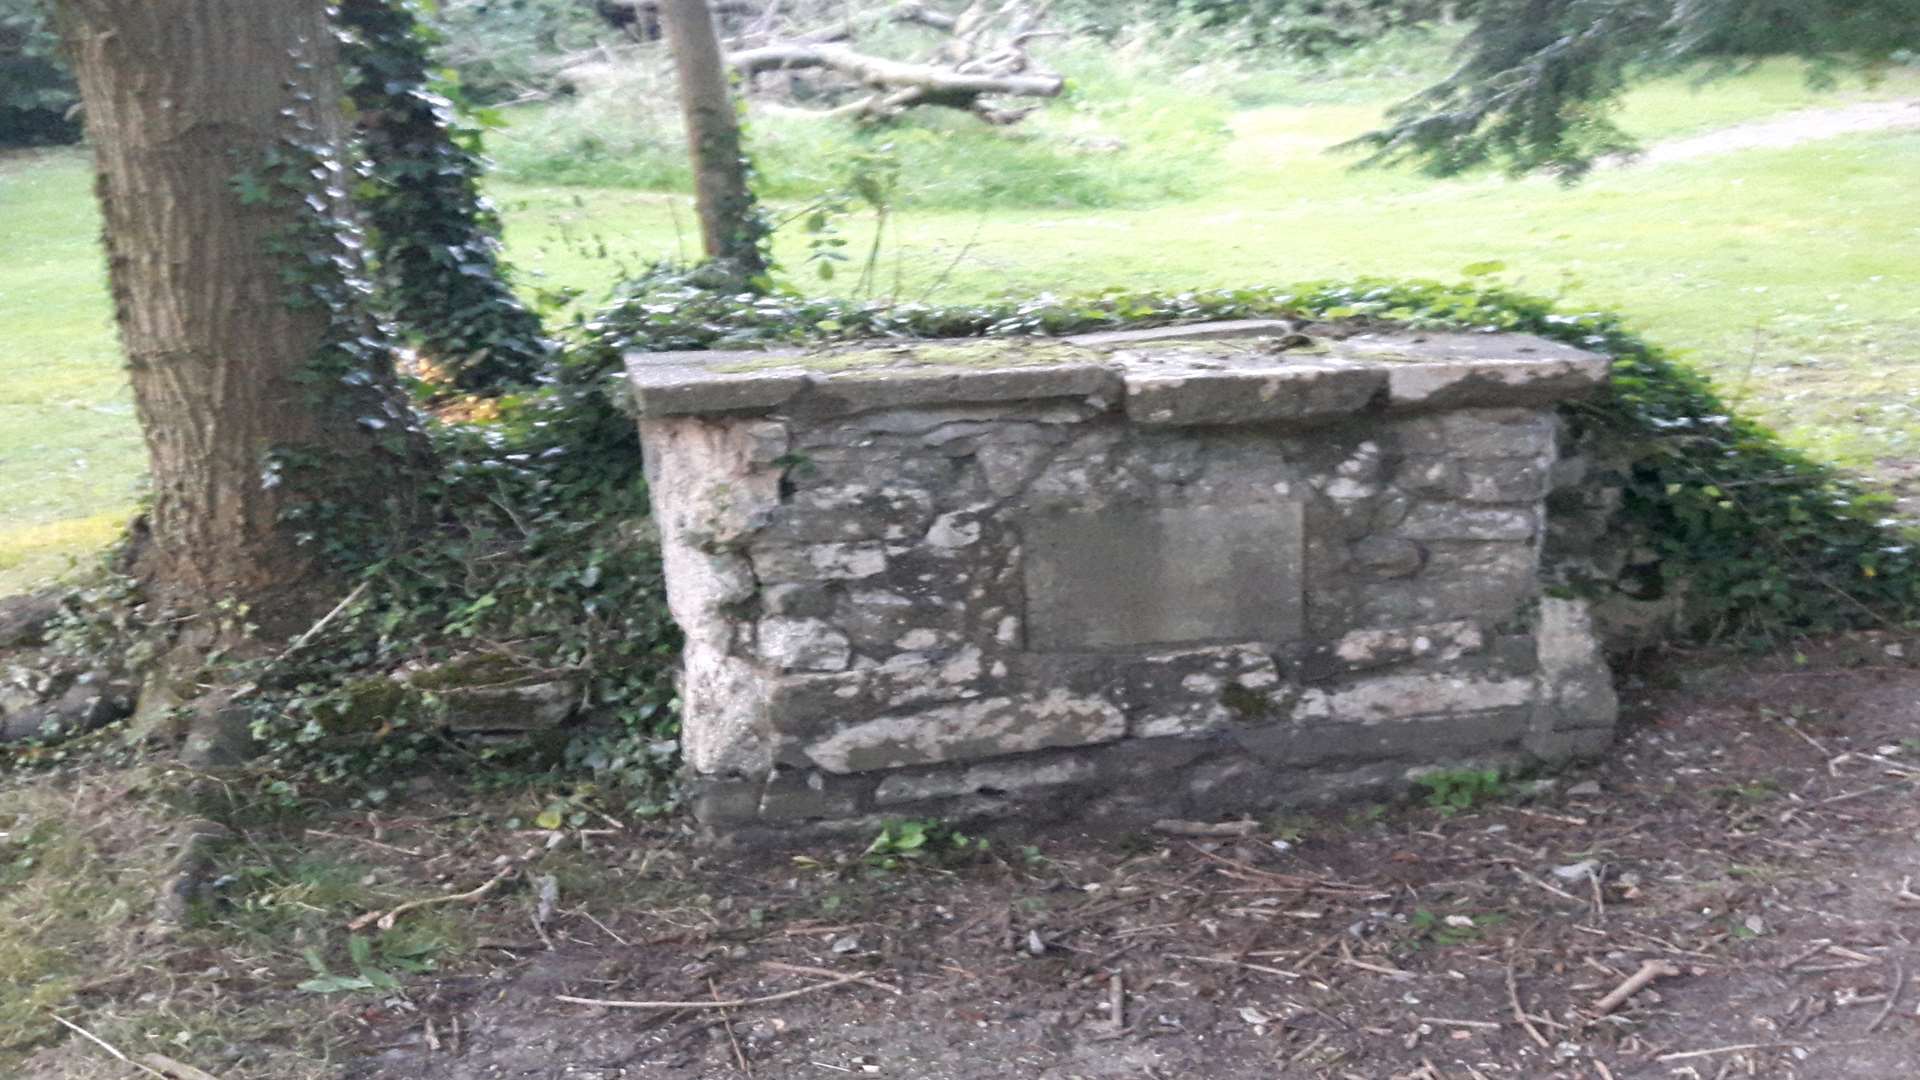 Richard's final resting place